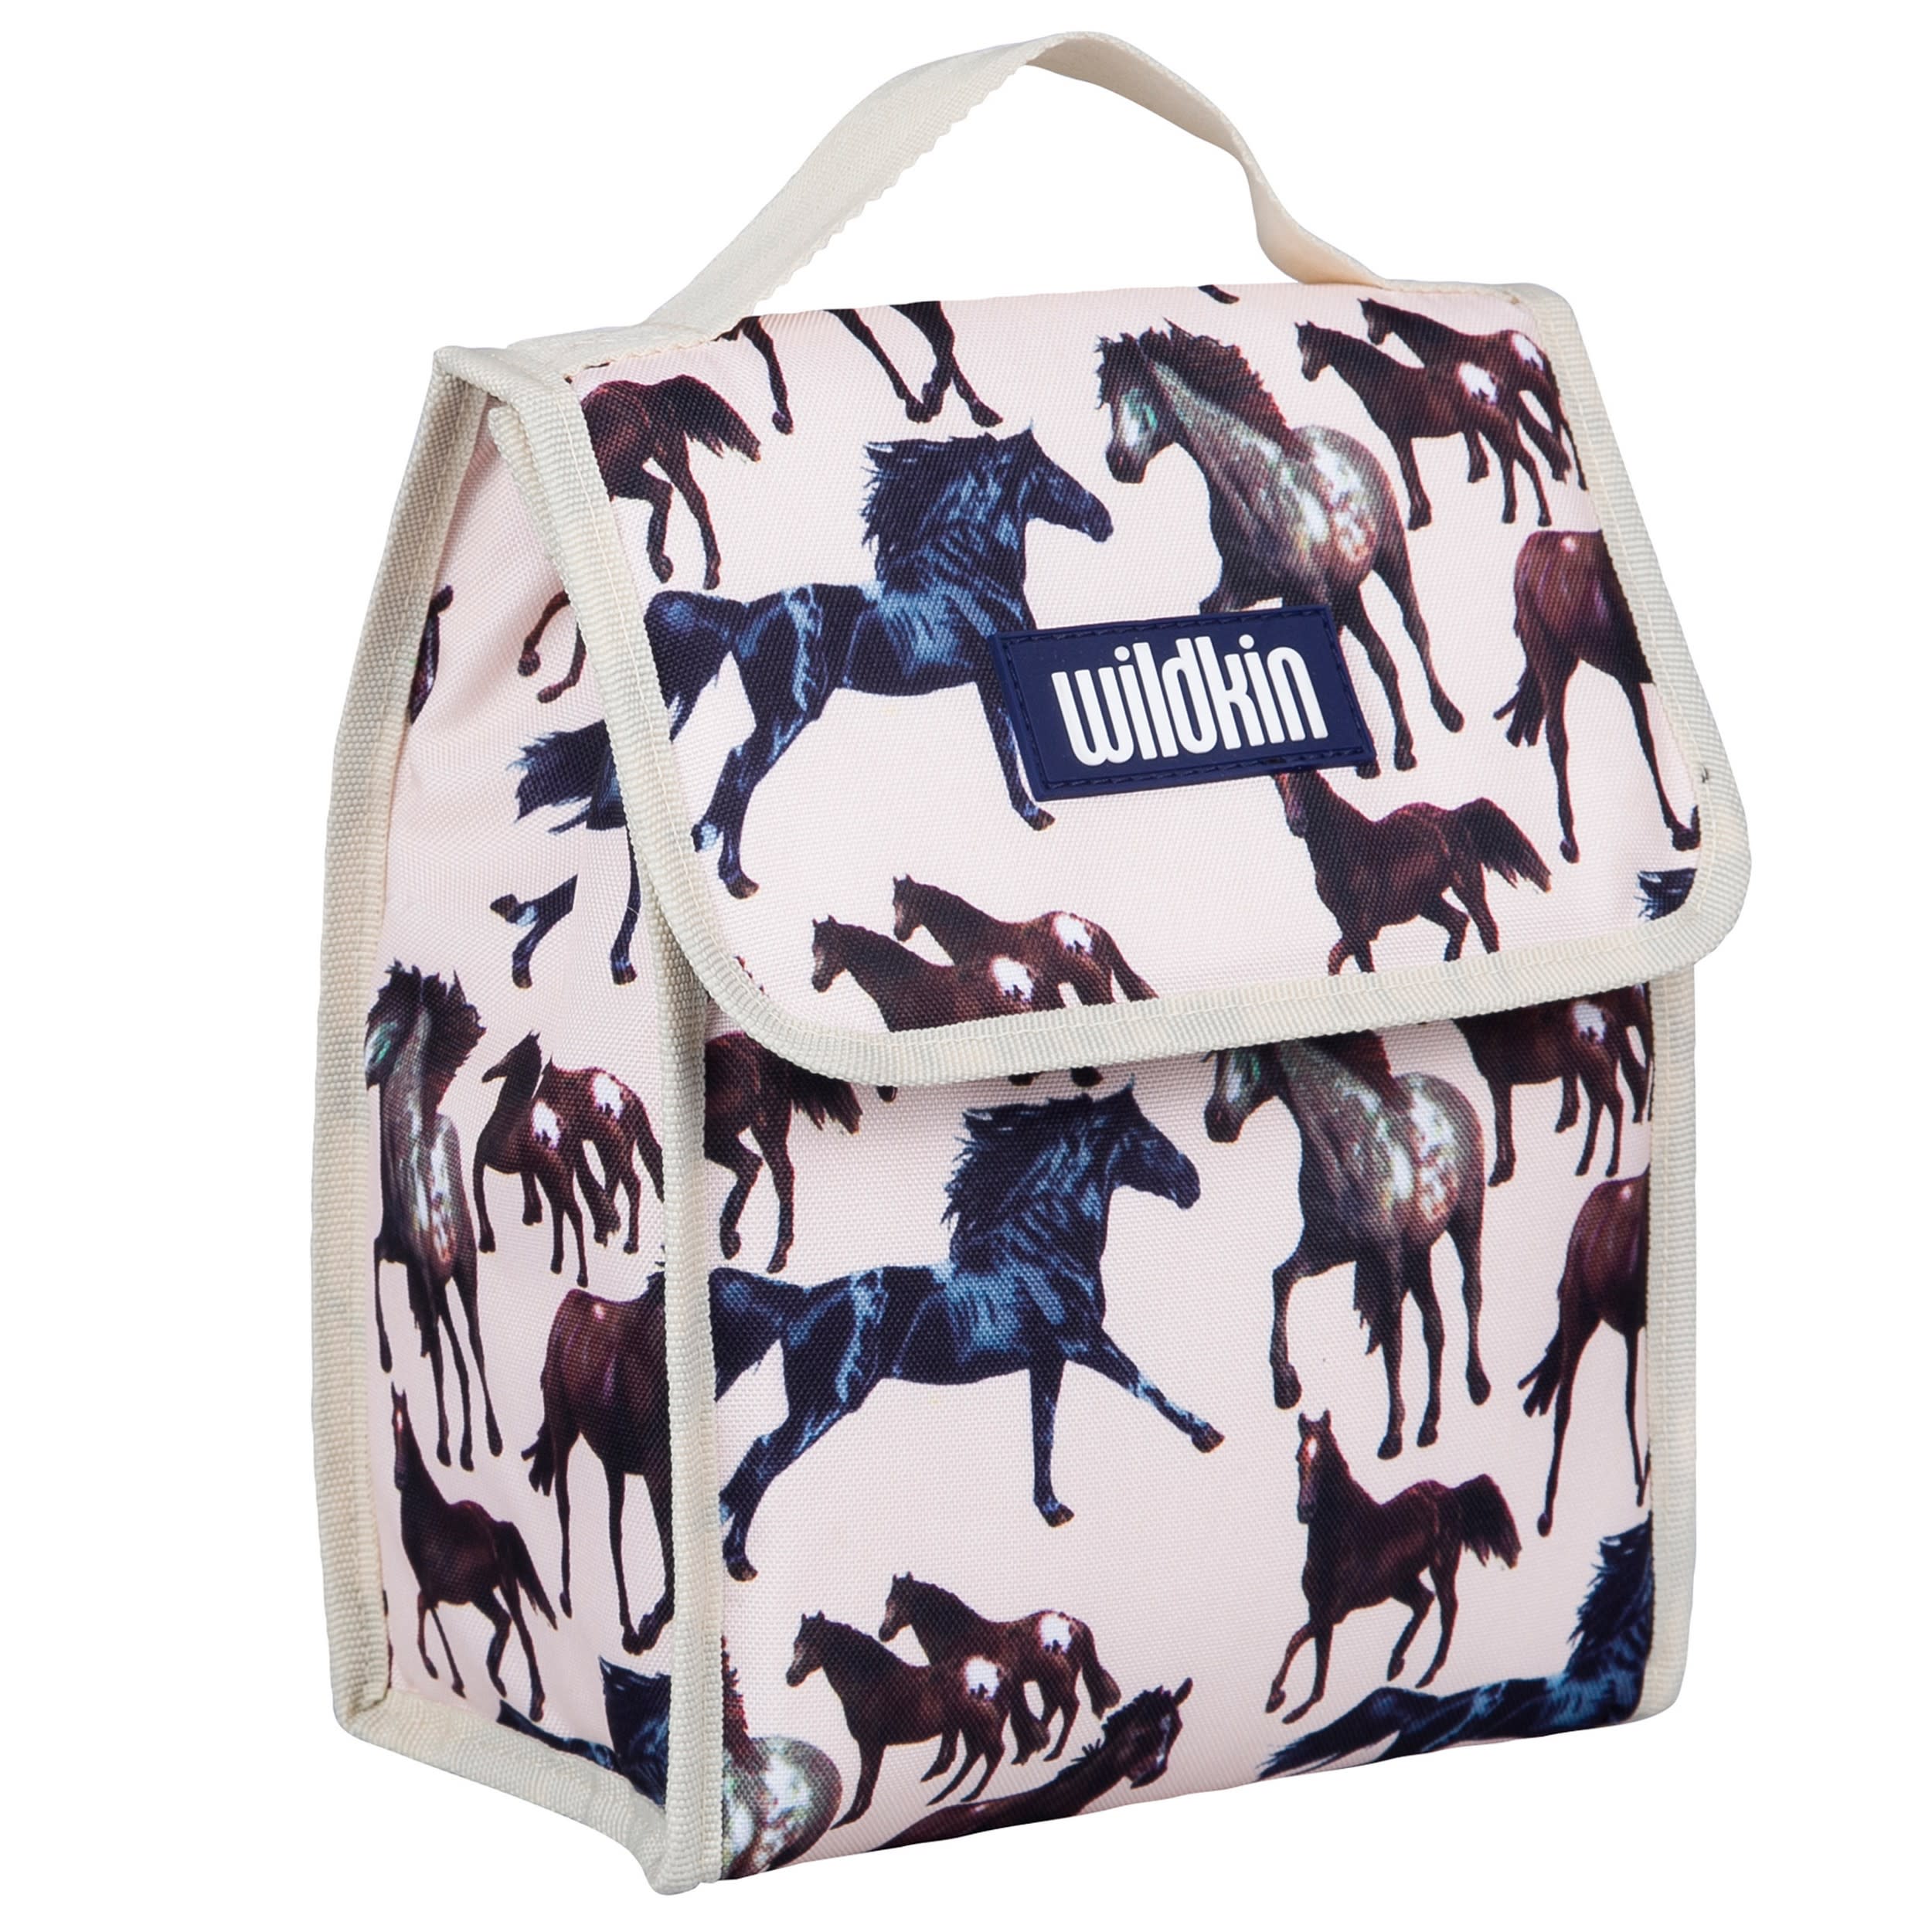 Wildkin Zebra Black Animal Print Insulated Lunch Box for Boys and